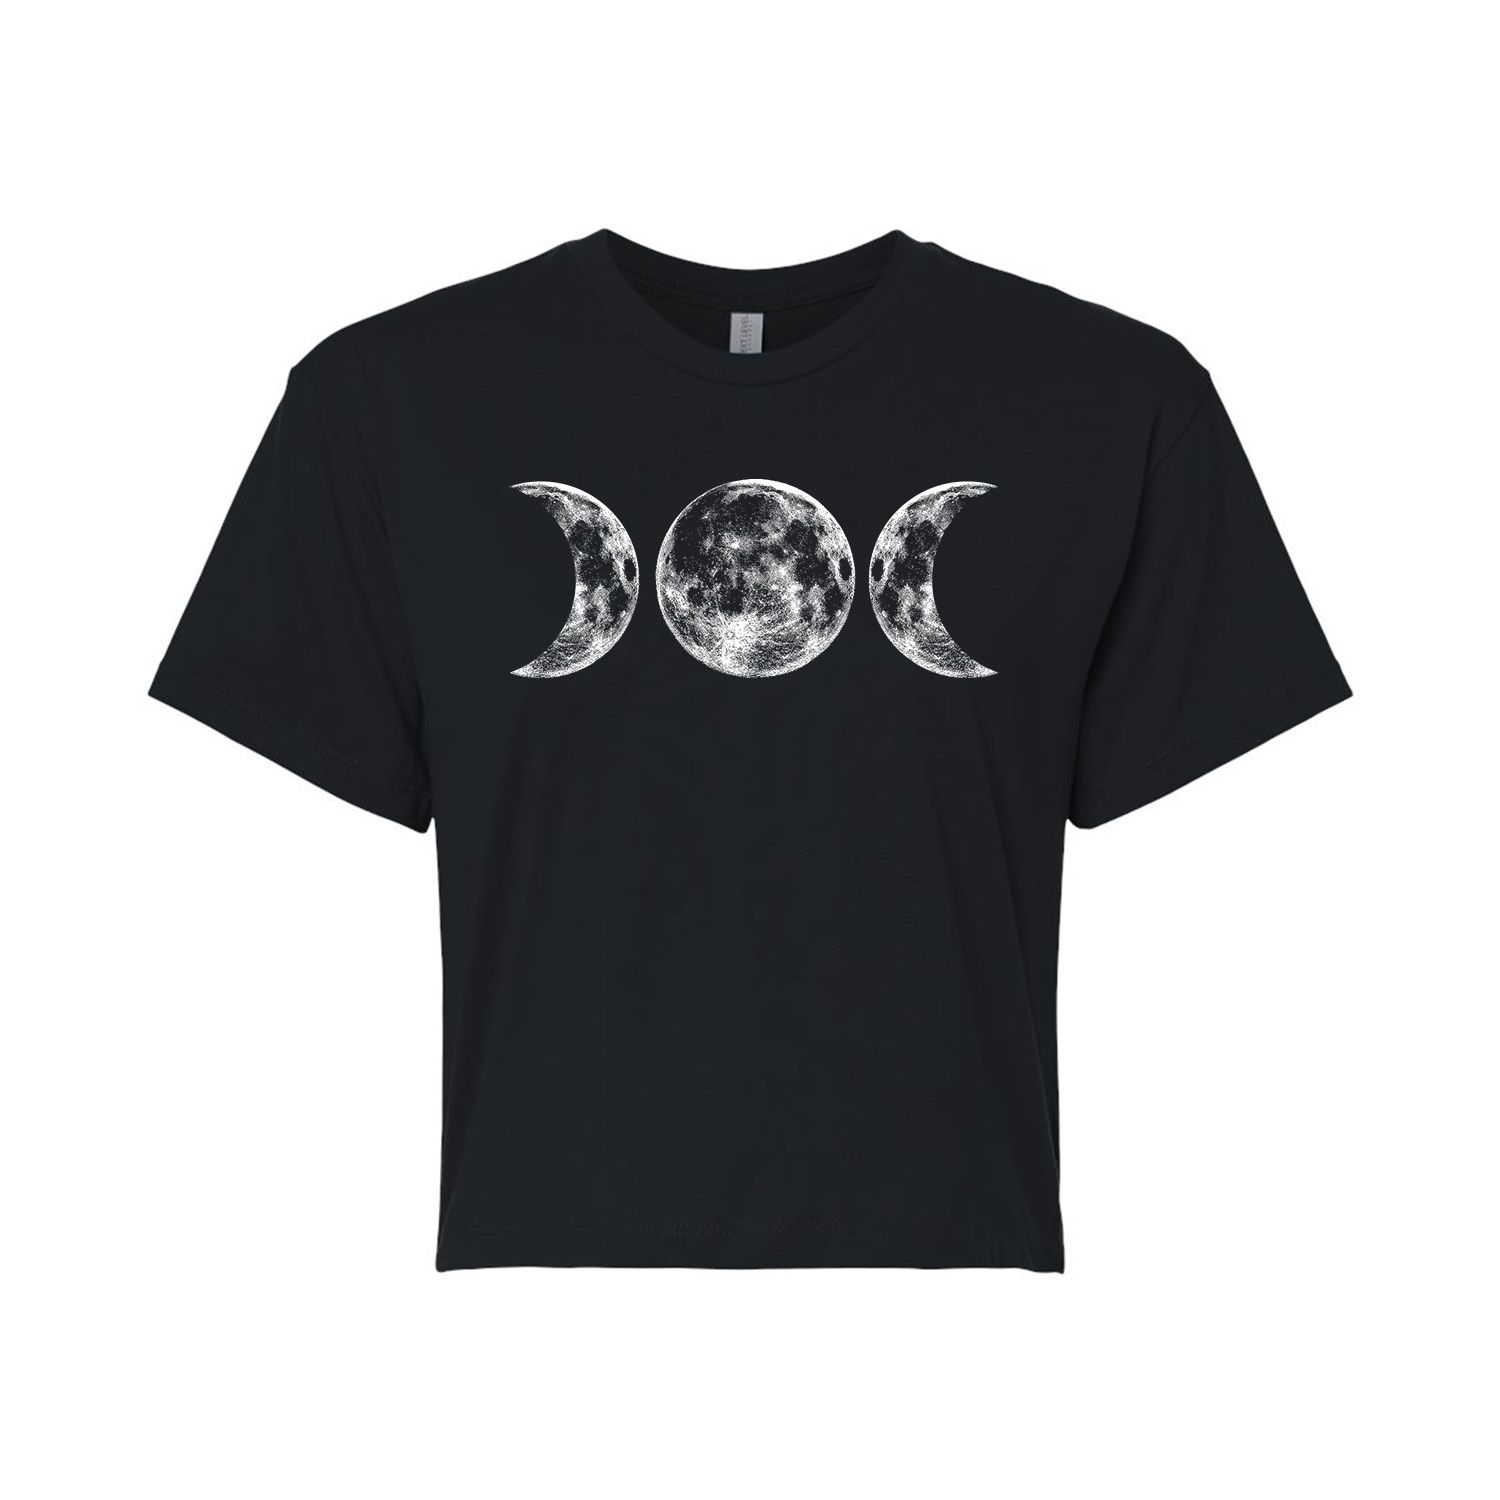 Укороченная футболка с рисунком Moon Phases для юниоров Licensed Character